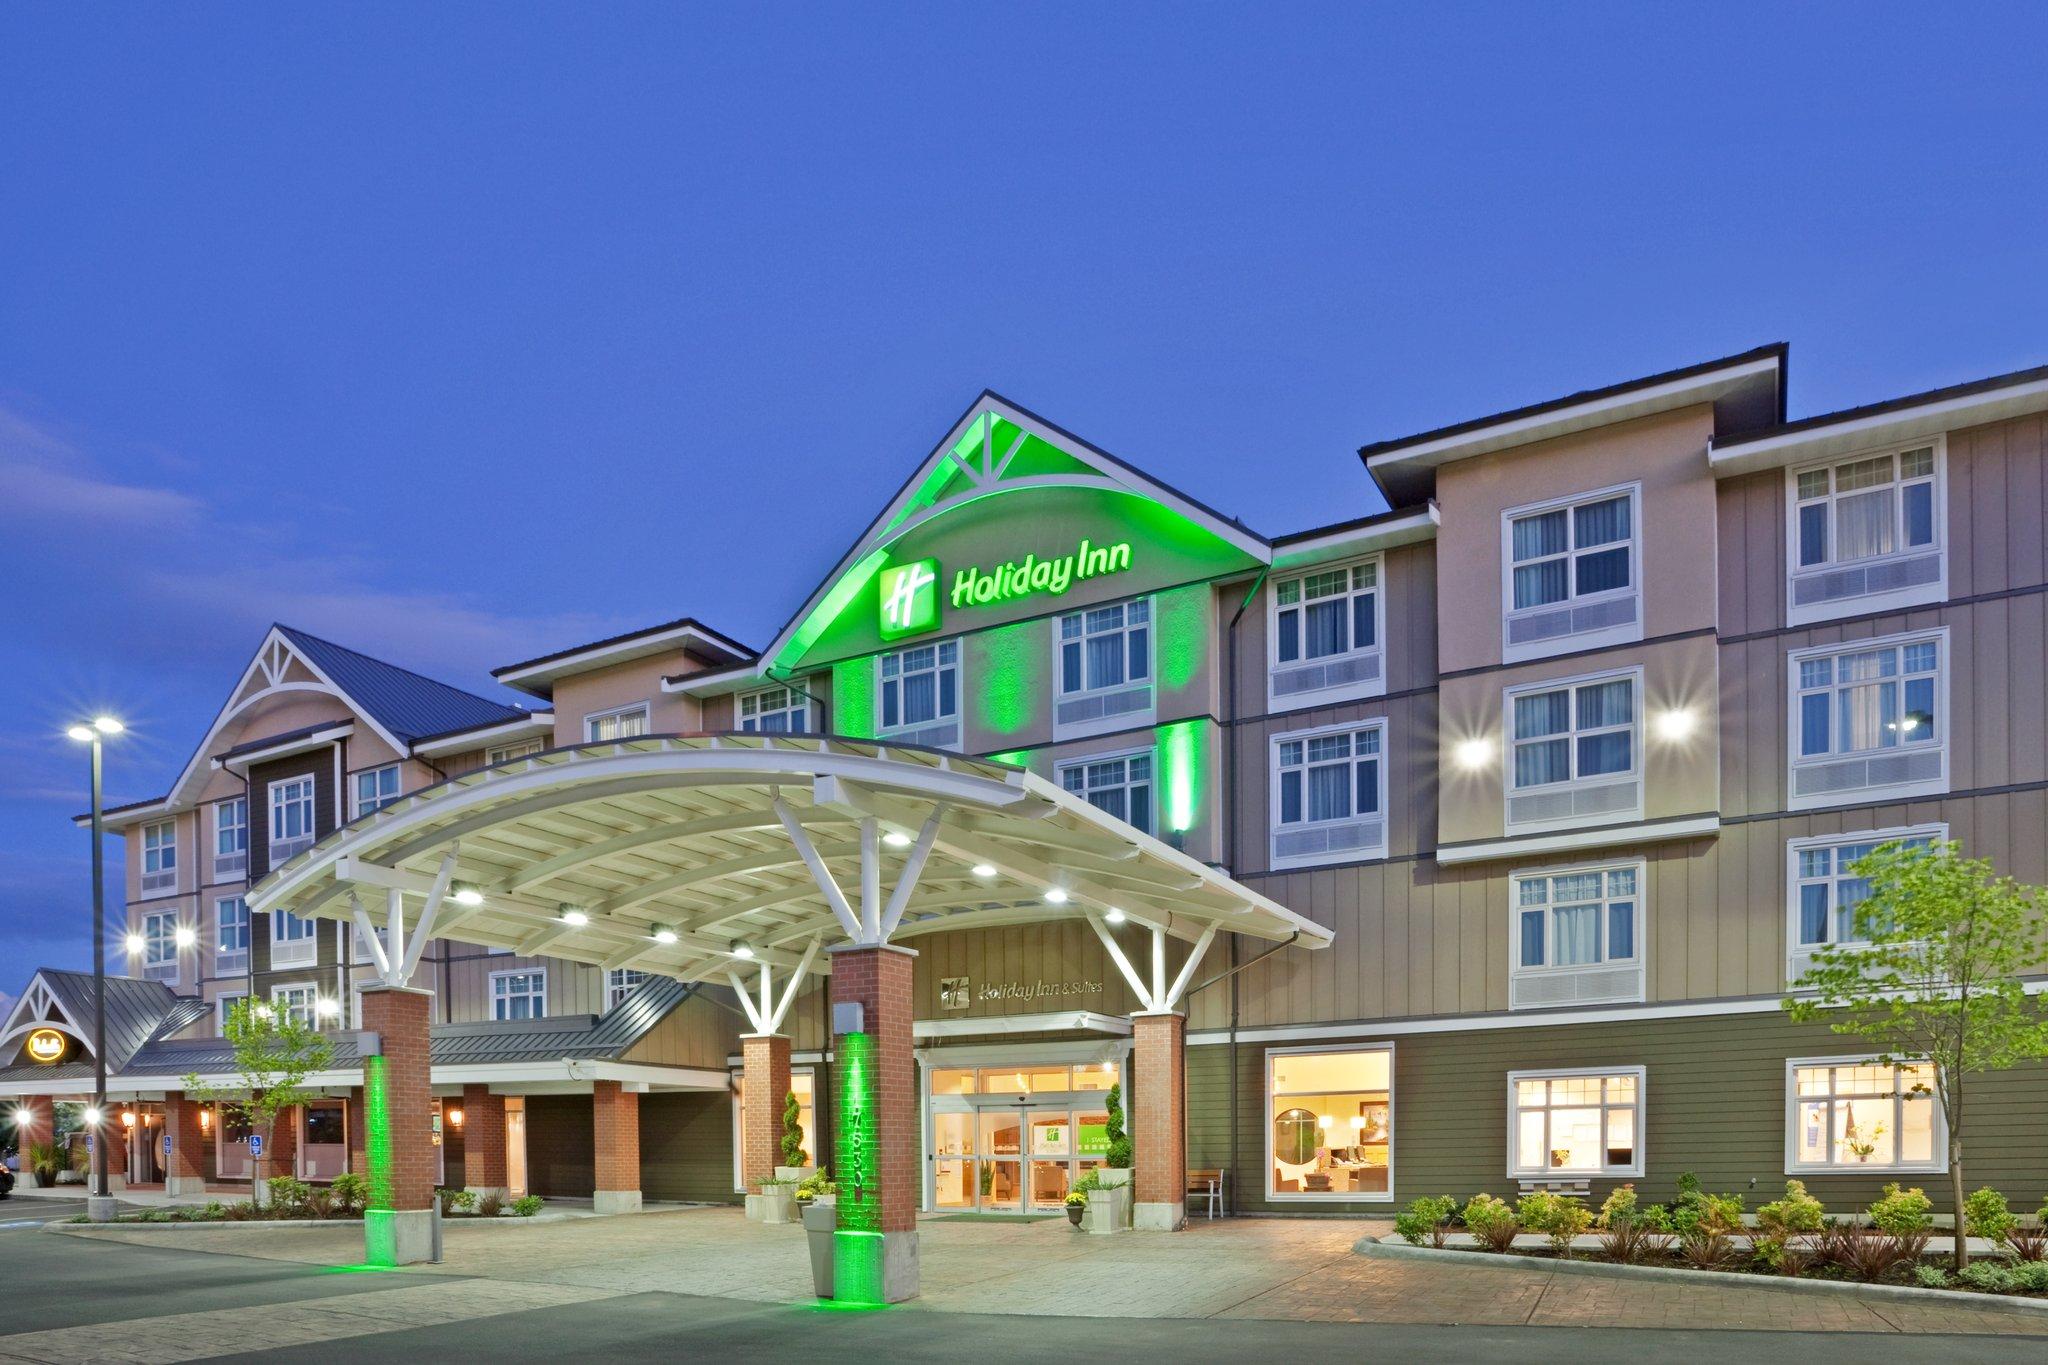 Holiday Inn Hotel & Suites Surrey in Surrey, BC